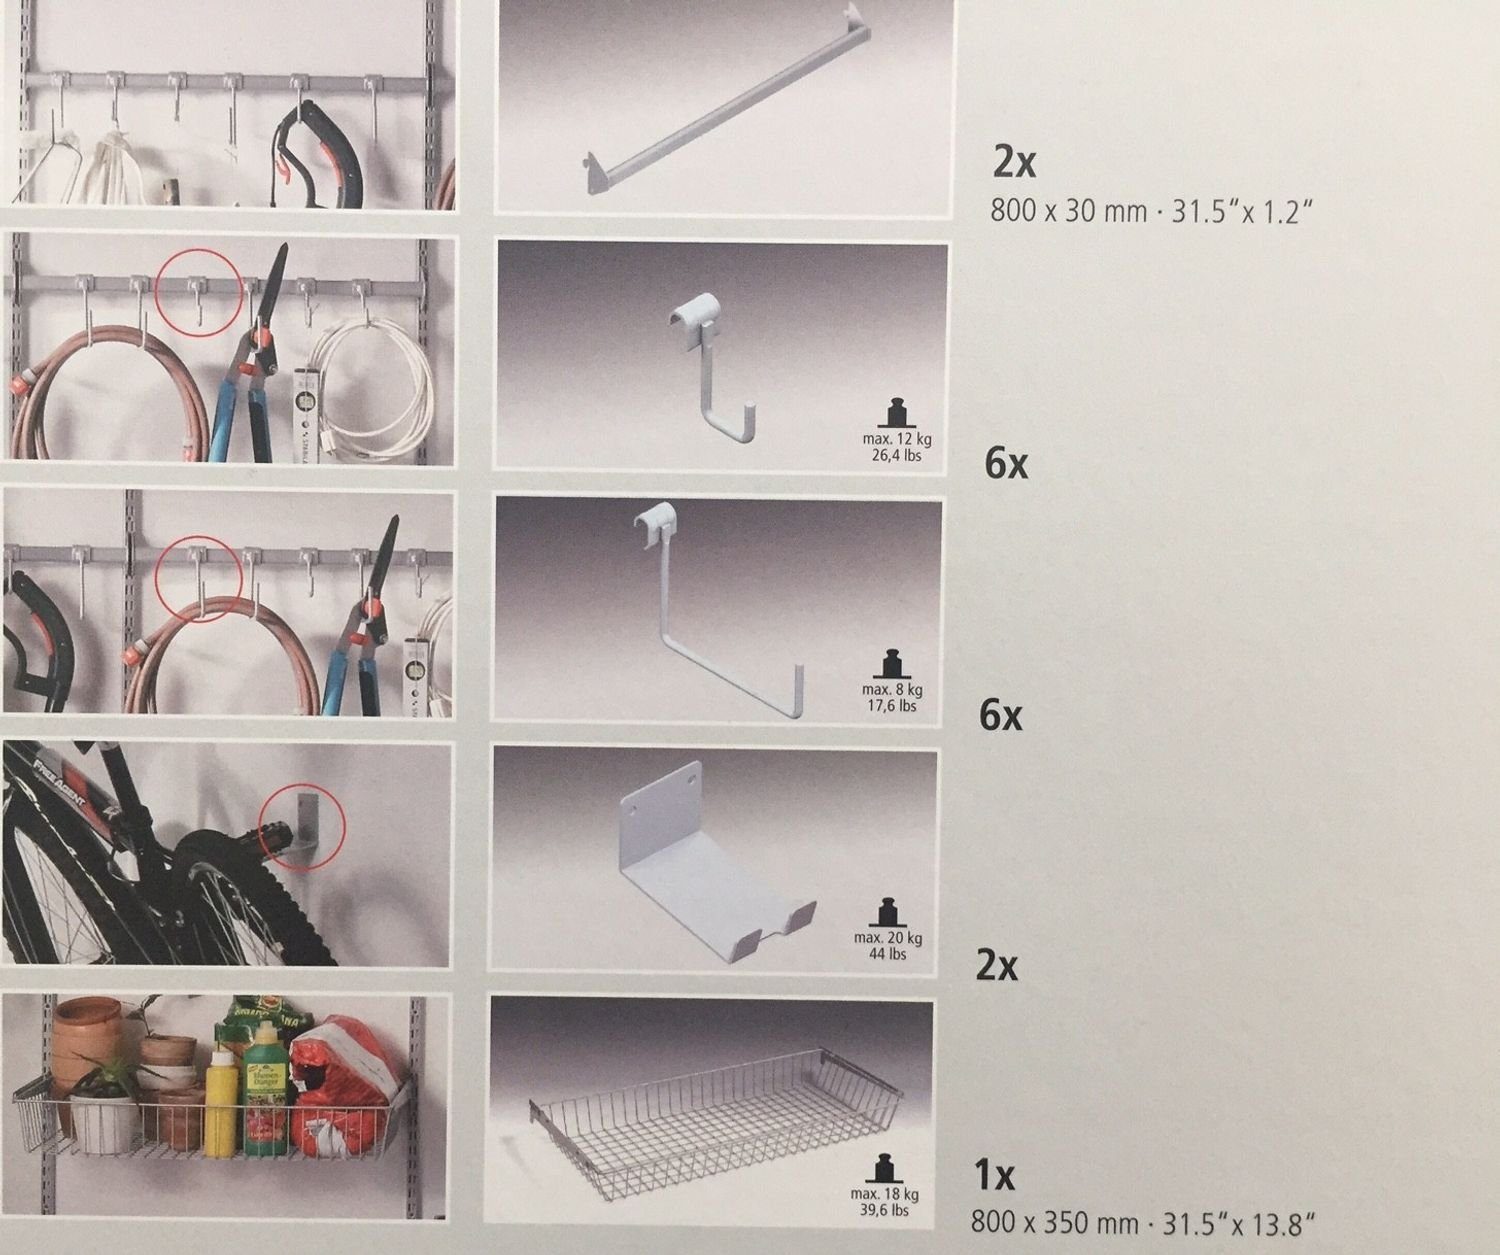 DIY Element System Regal Garage Plus + für Basic + Storage Modular Regalsystem Storag Kit 1 Set